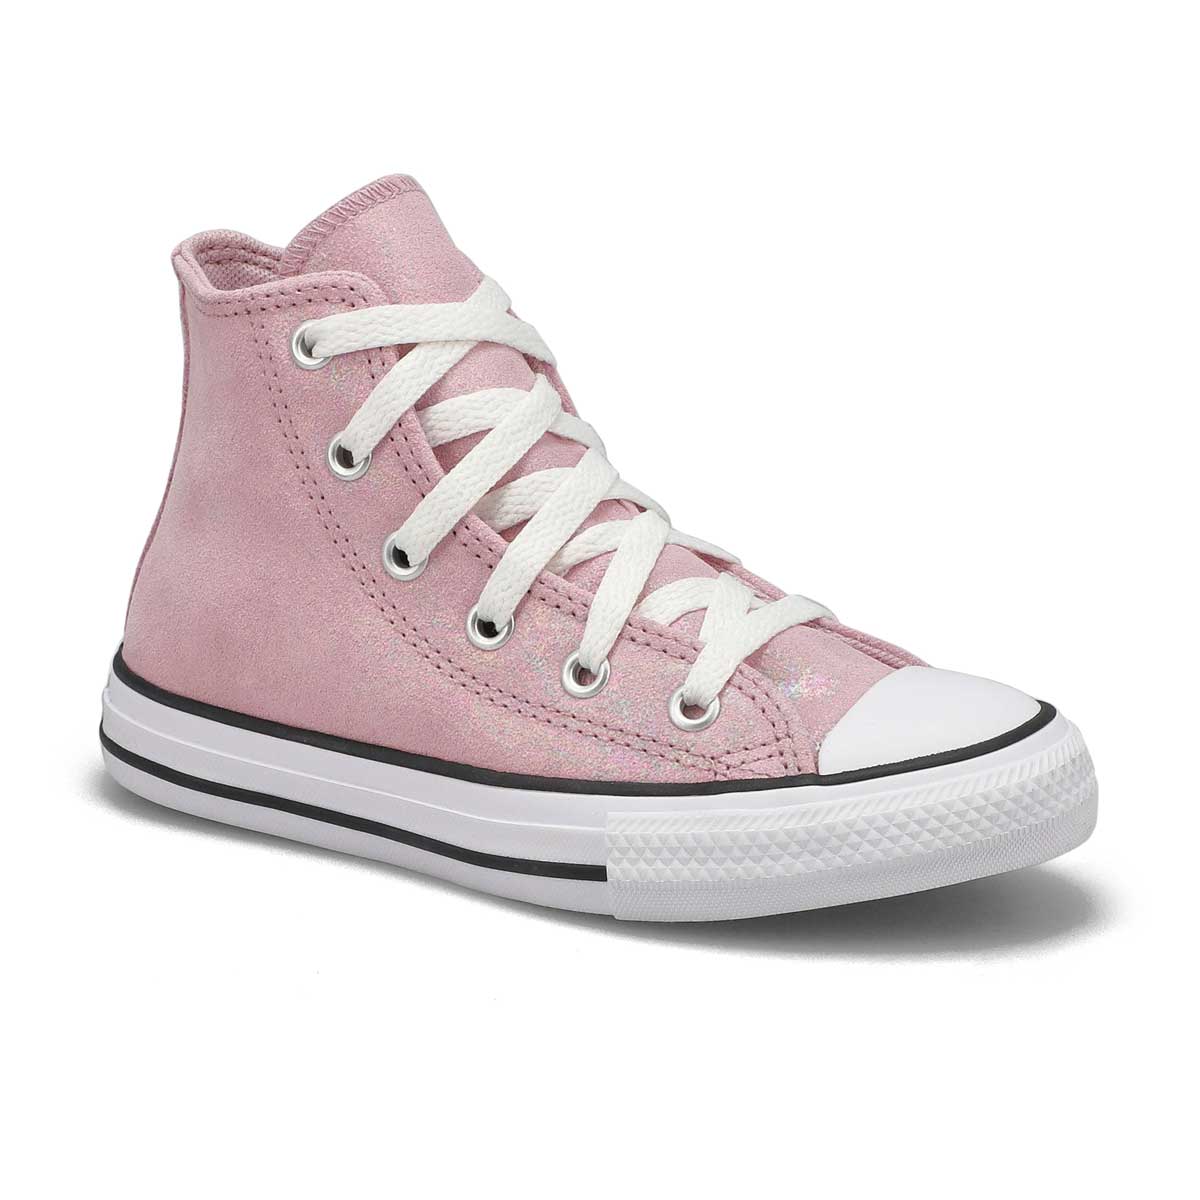 Girls' All Star Hi Top Sneaker - Pink/White/Black